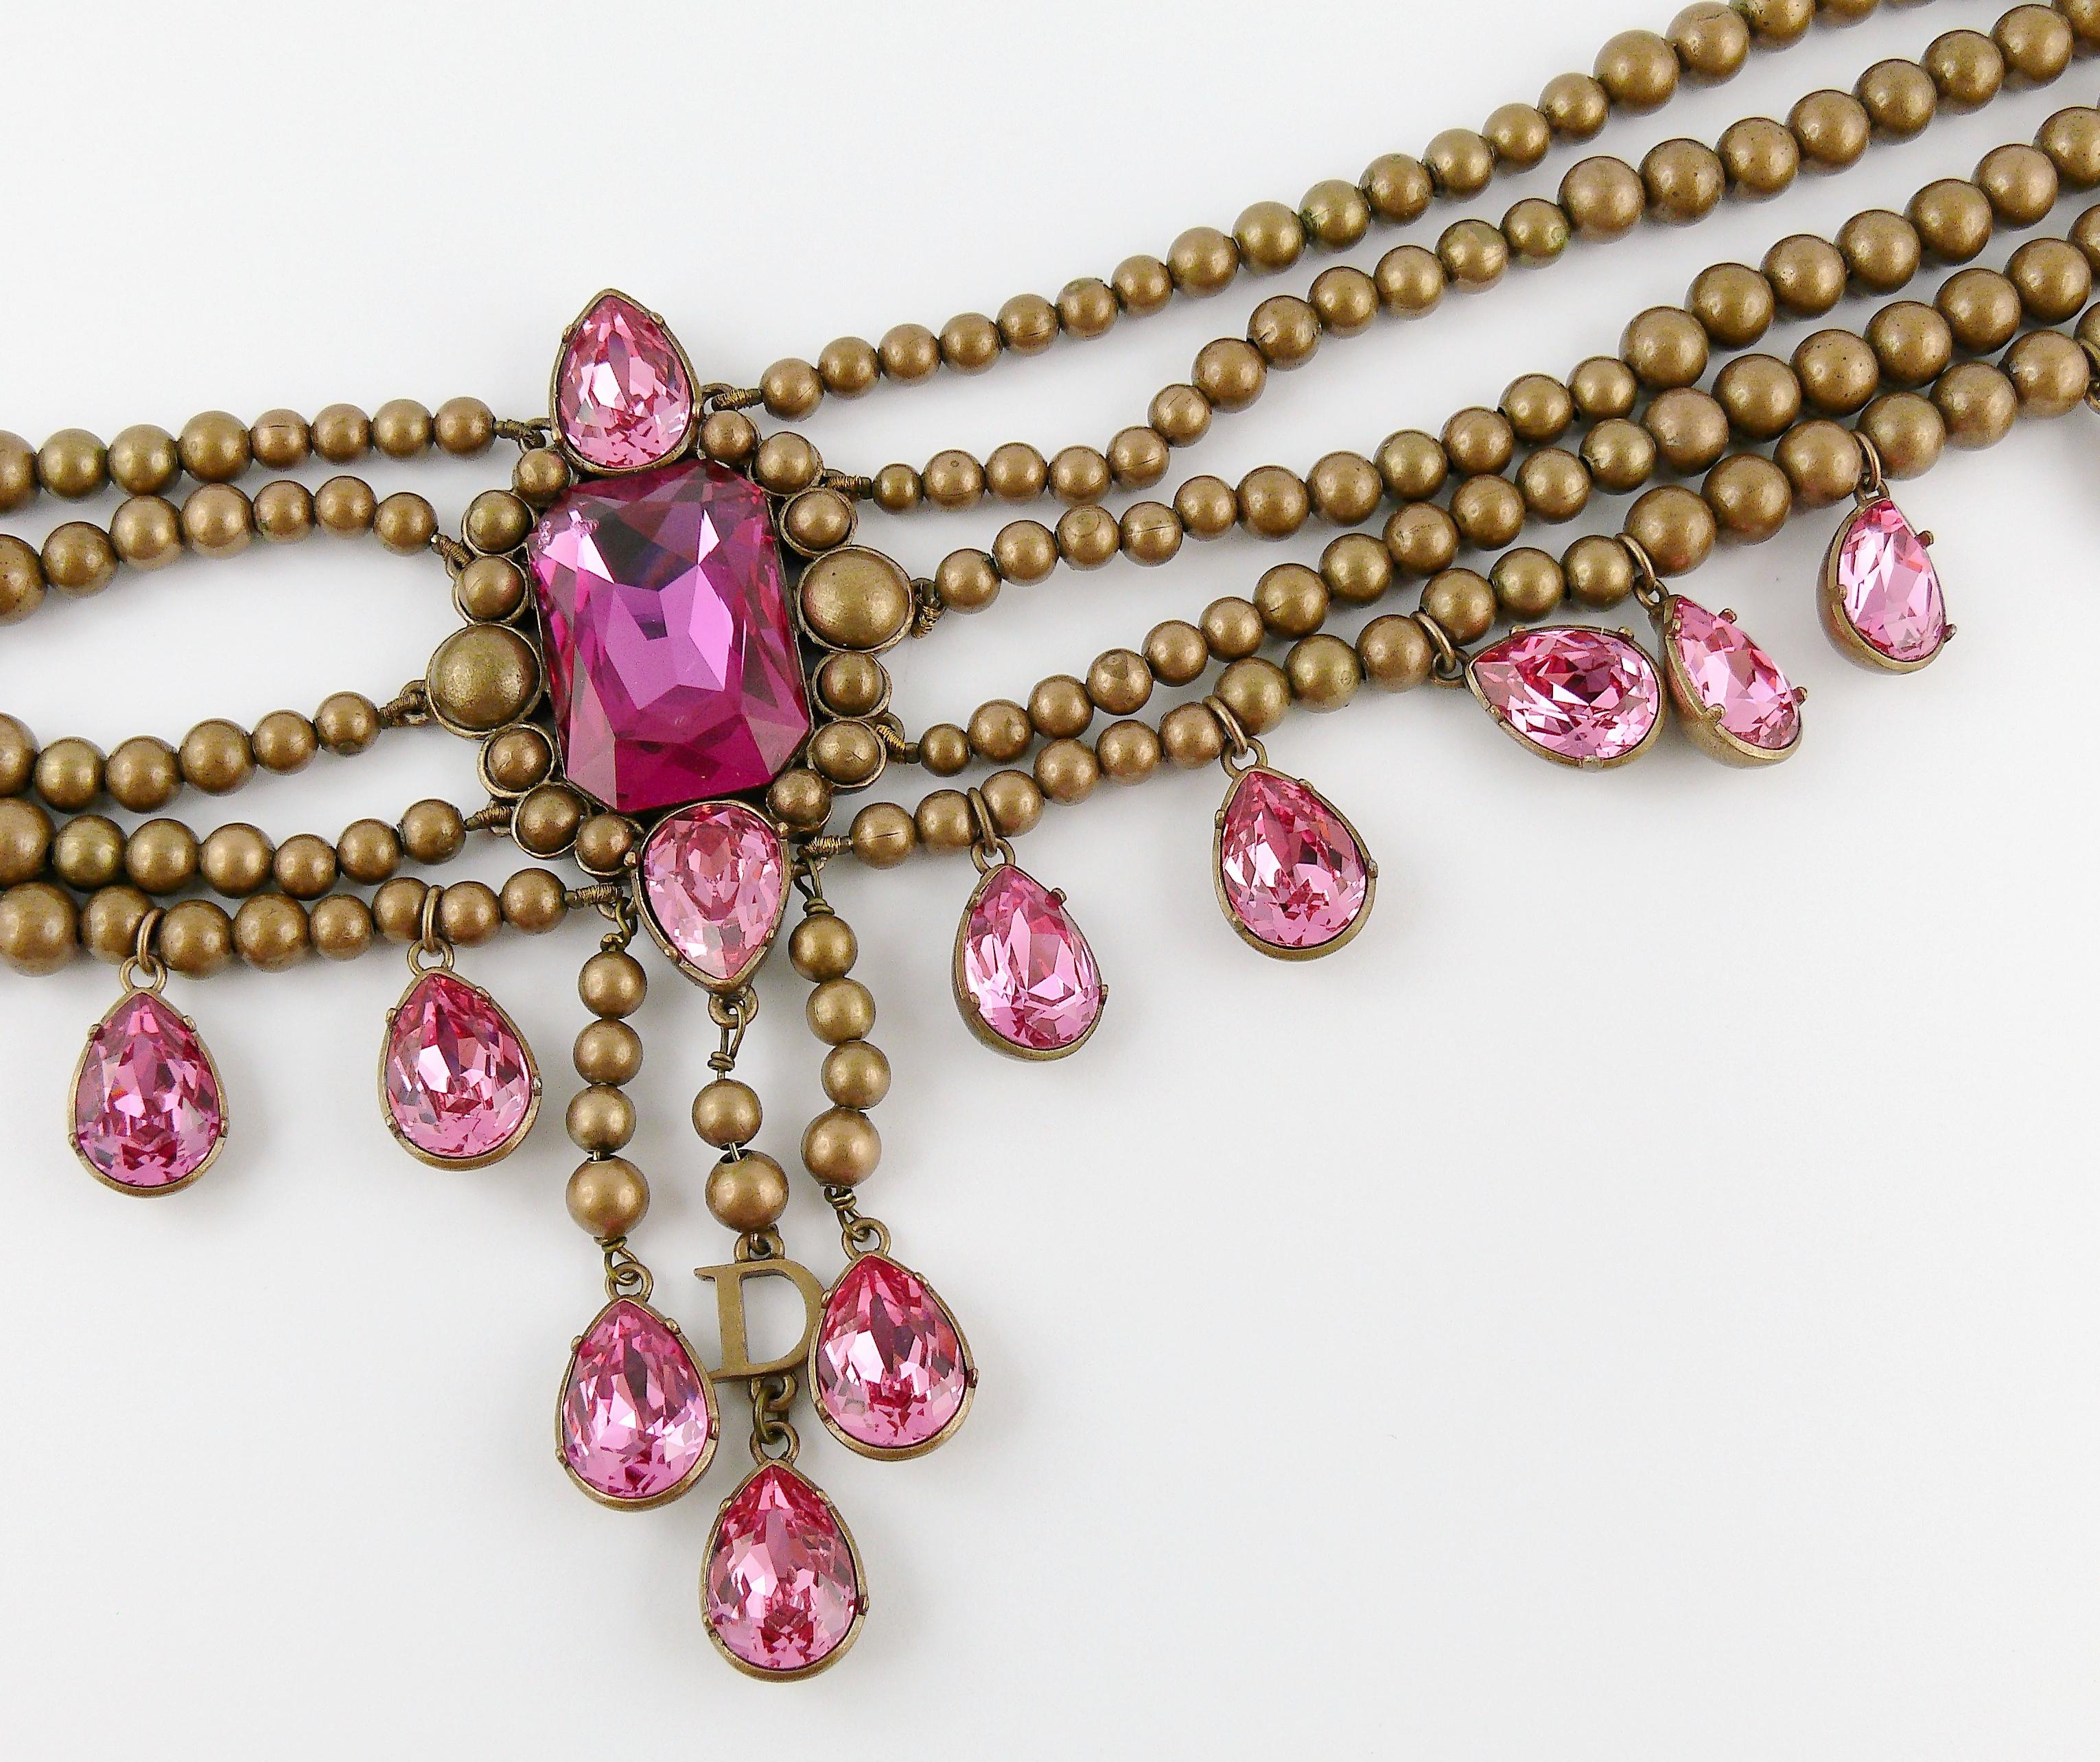 Women's Christian Dior Jewelled Edwardian Choker Necklace